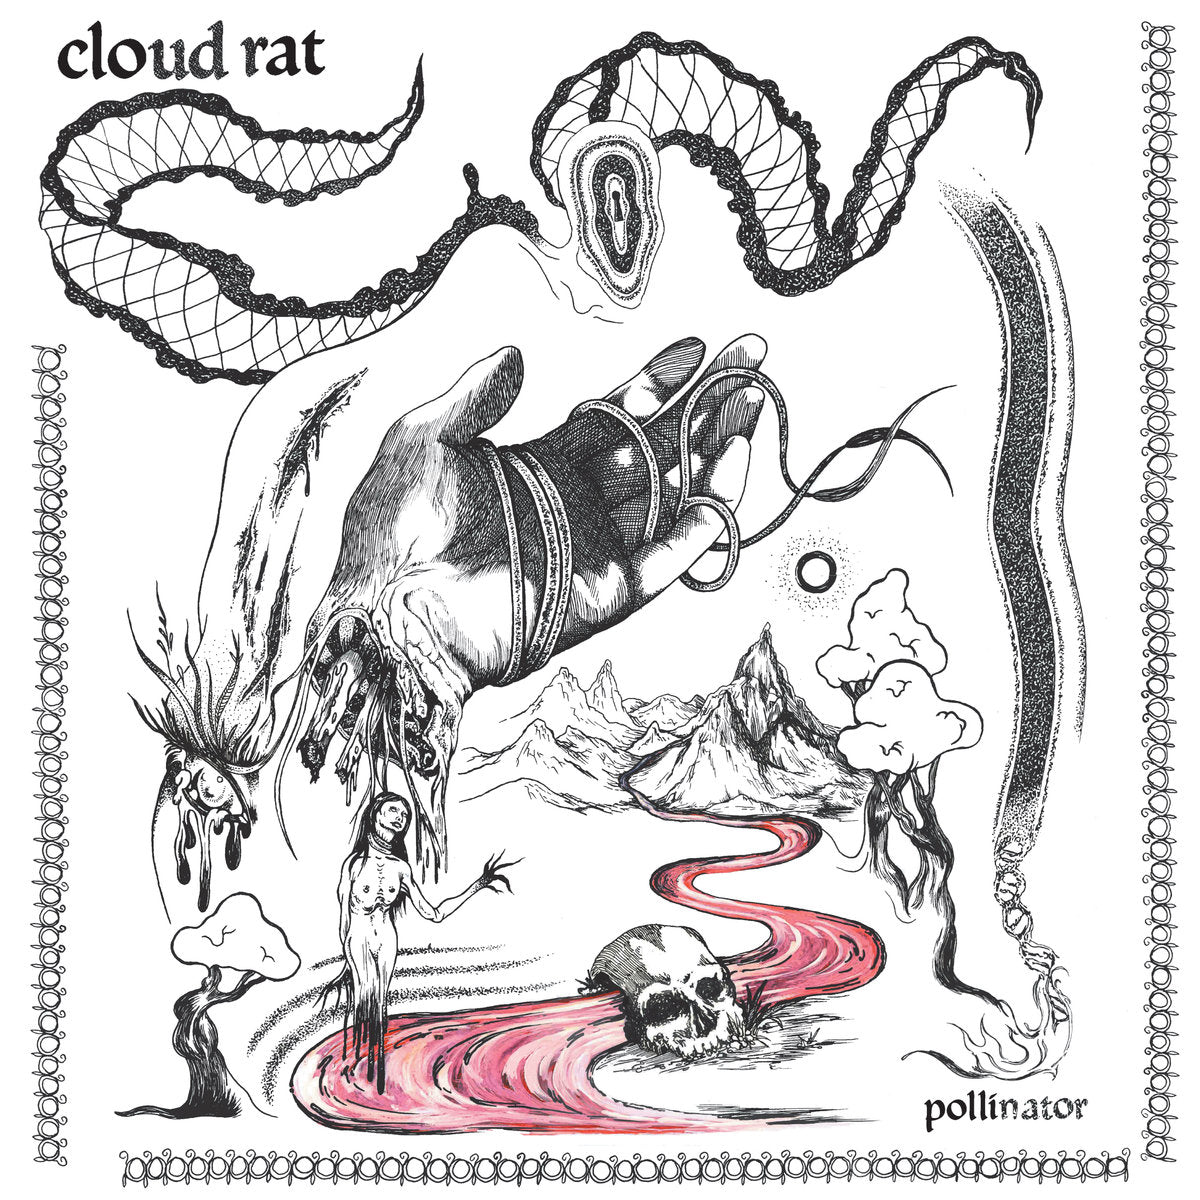 CLOUD RAT "Pollinator" LP